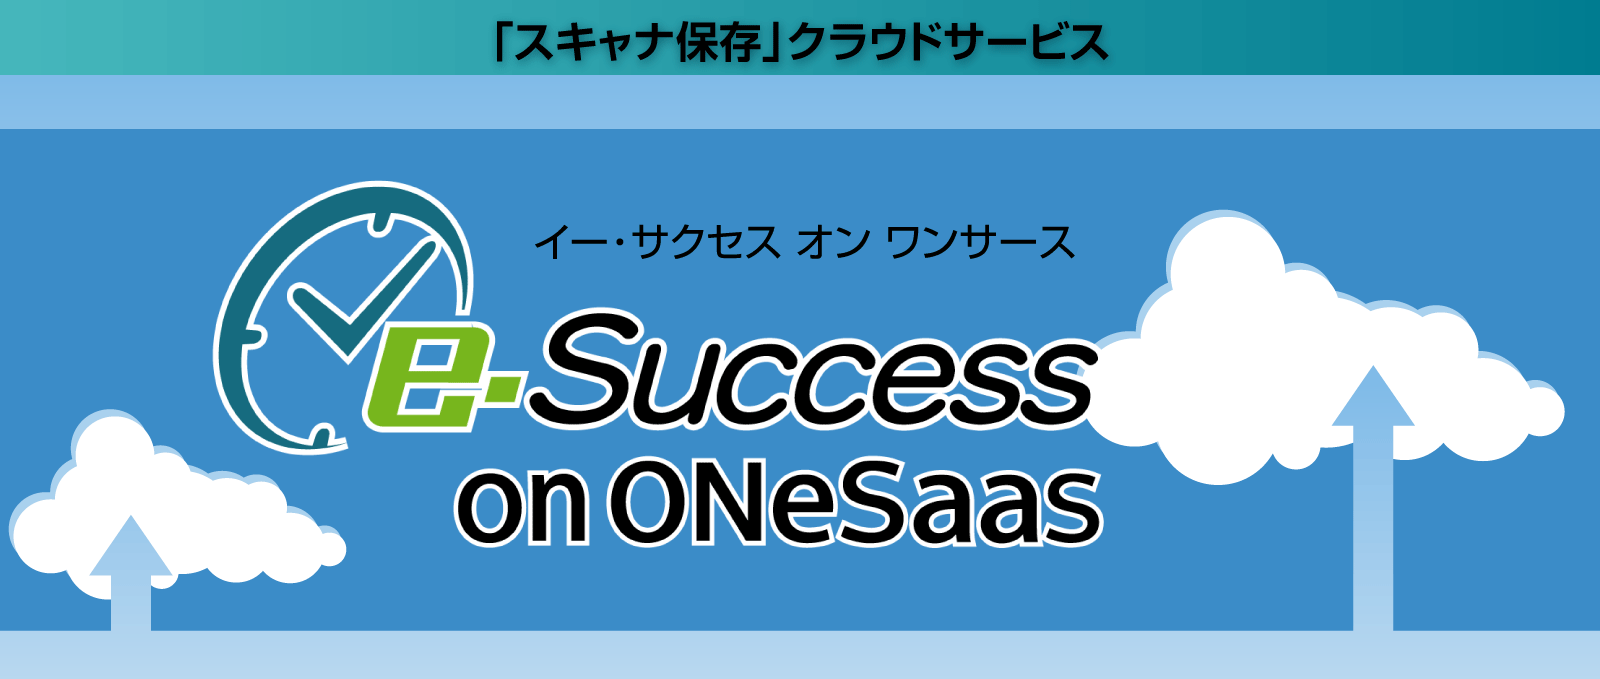 e-Success on ONeSaas